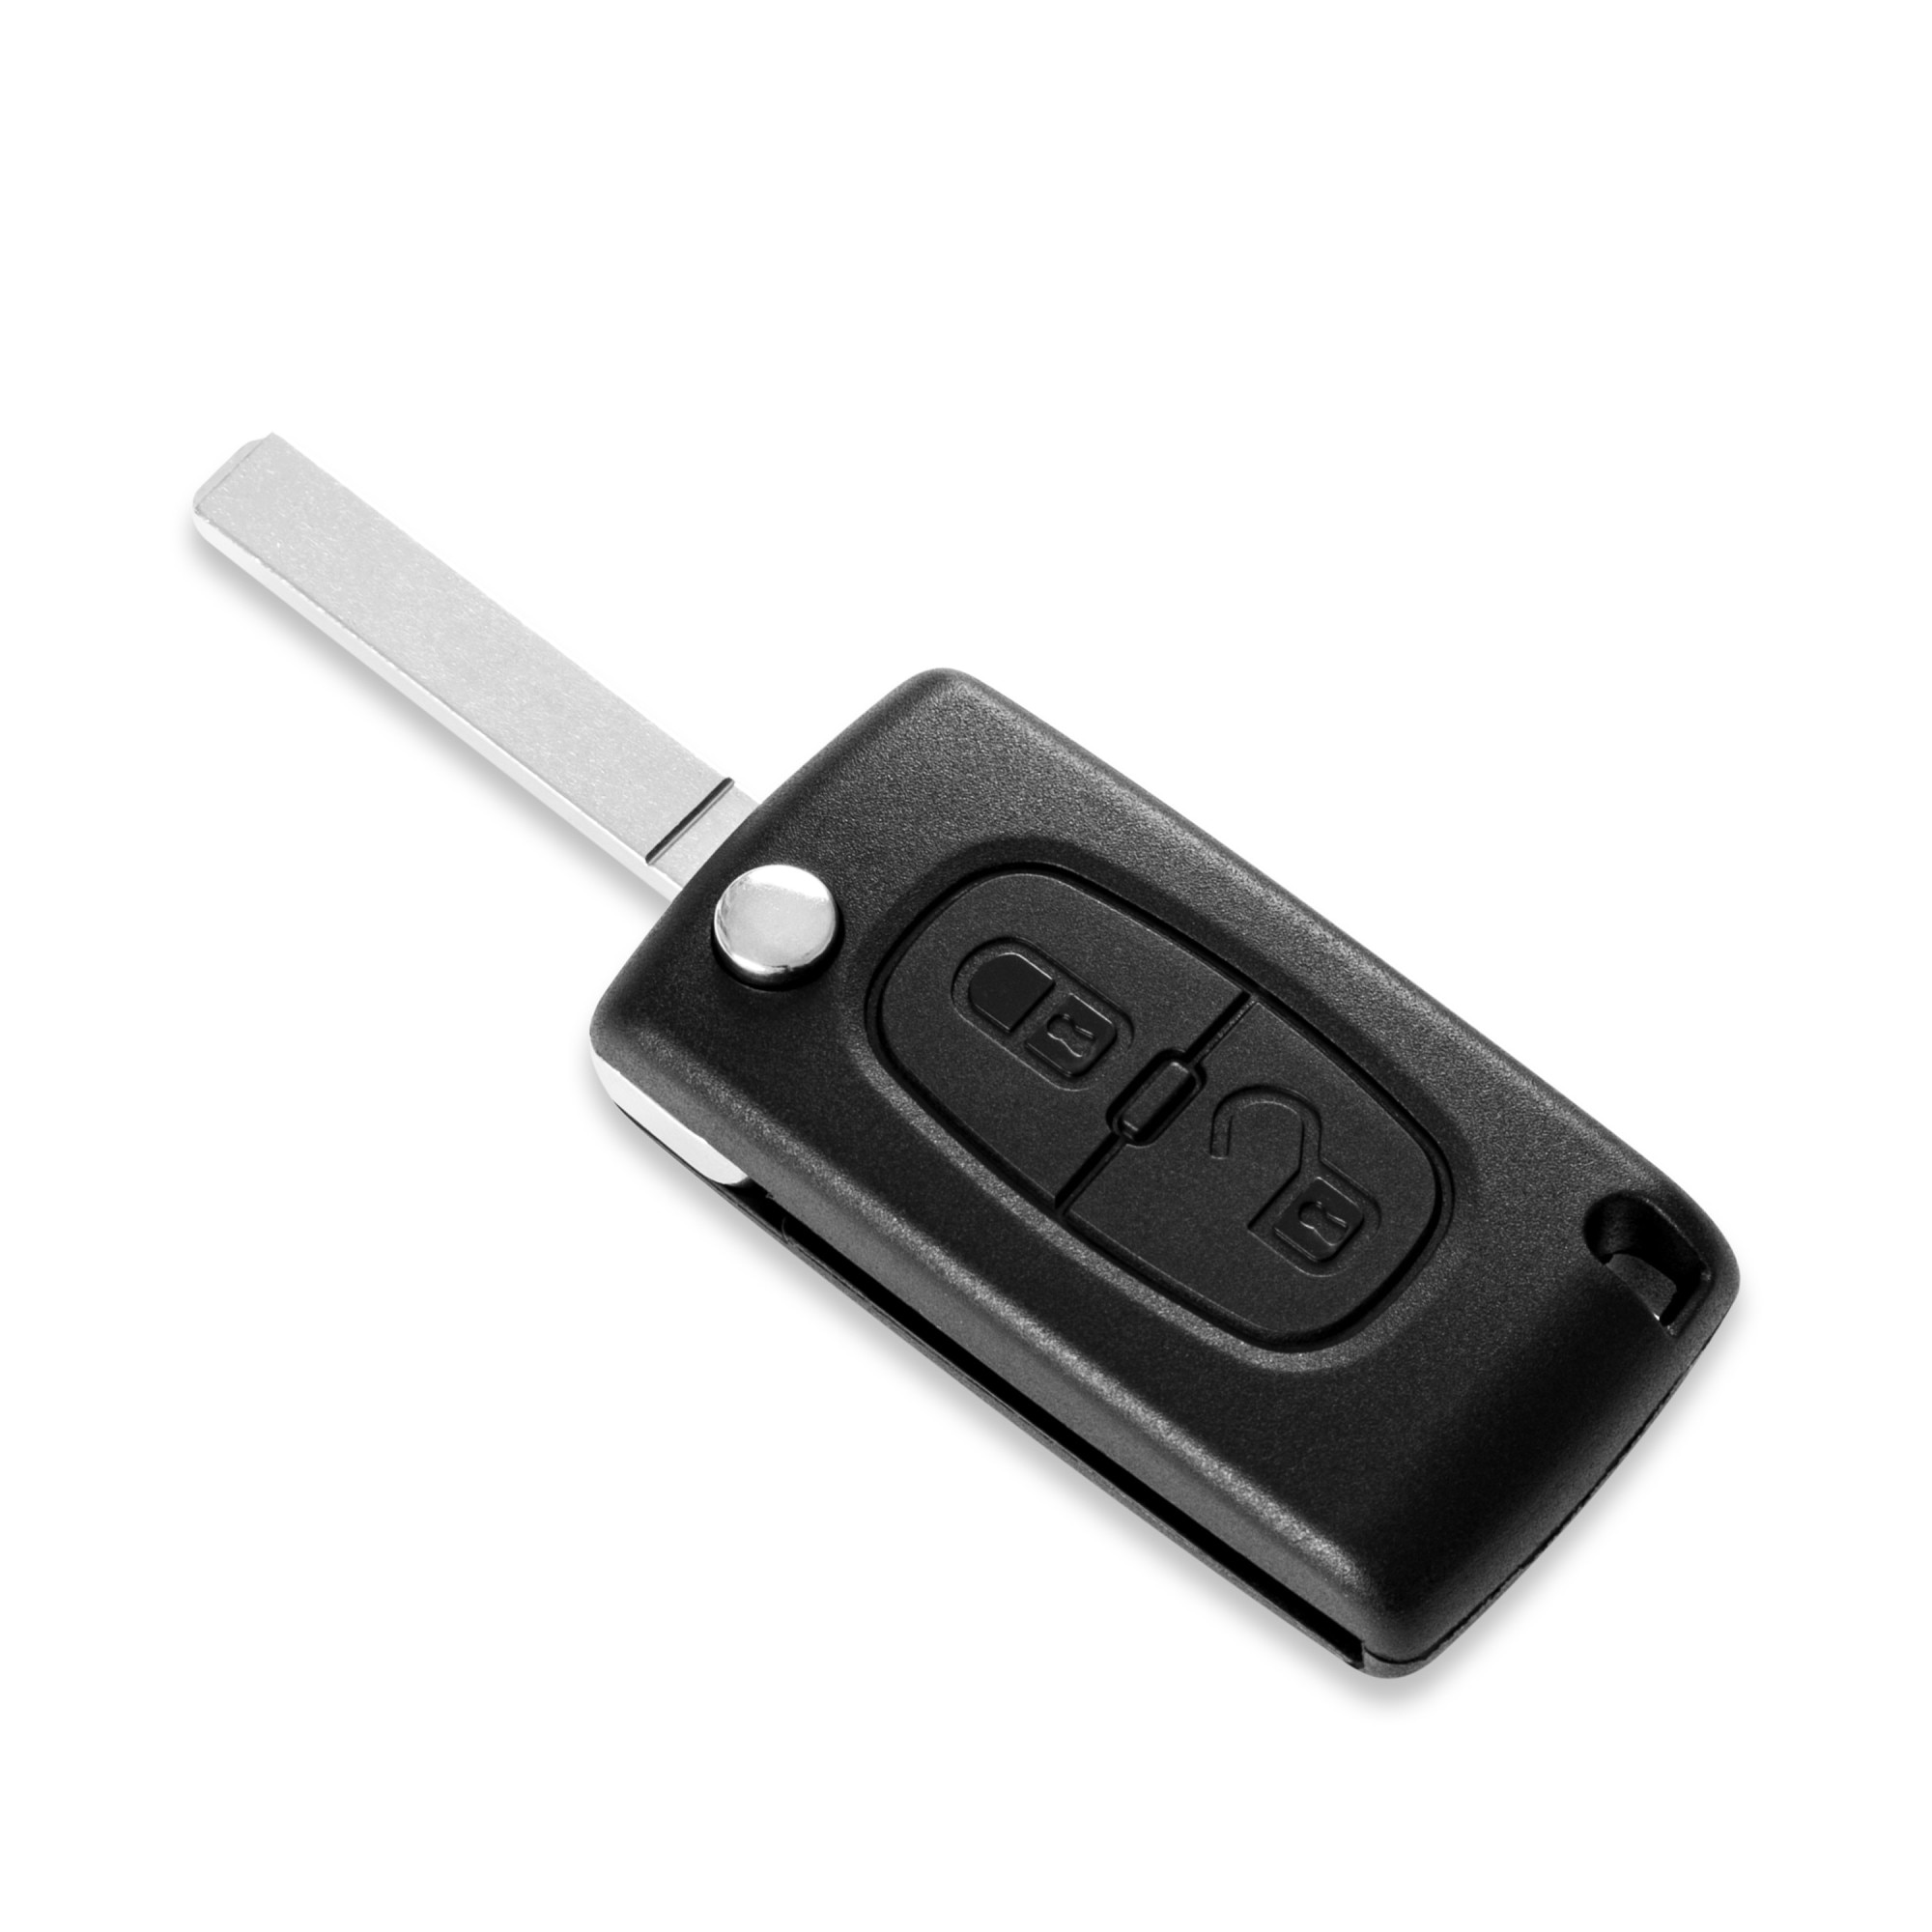 Carcasa de llave remota para coche, carcasa de 2 botones sin chip para  Peugeot 207, 307, 308, 407, 607, Citroen C4, C5, C3, Berlingo, Xsara,  HU83/VA2 - AliExpress